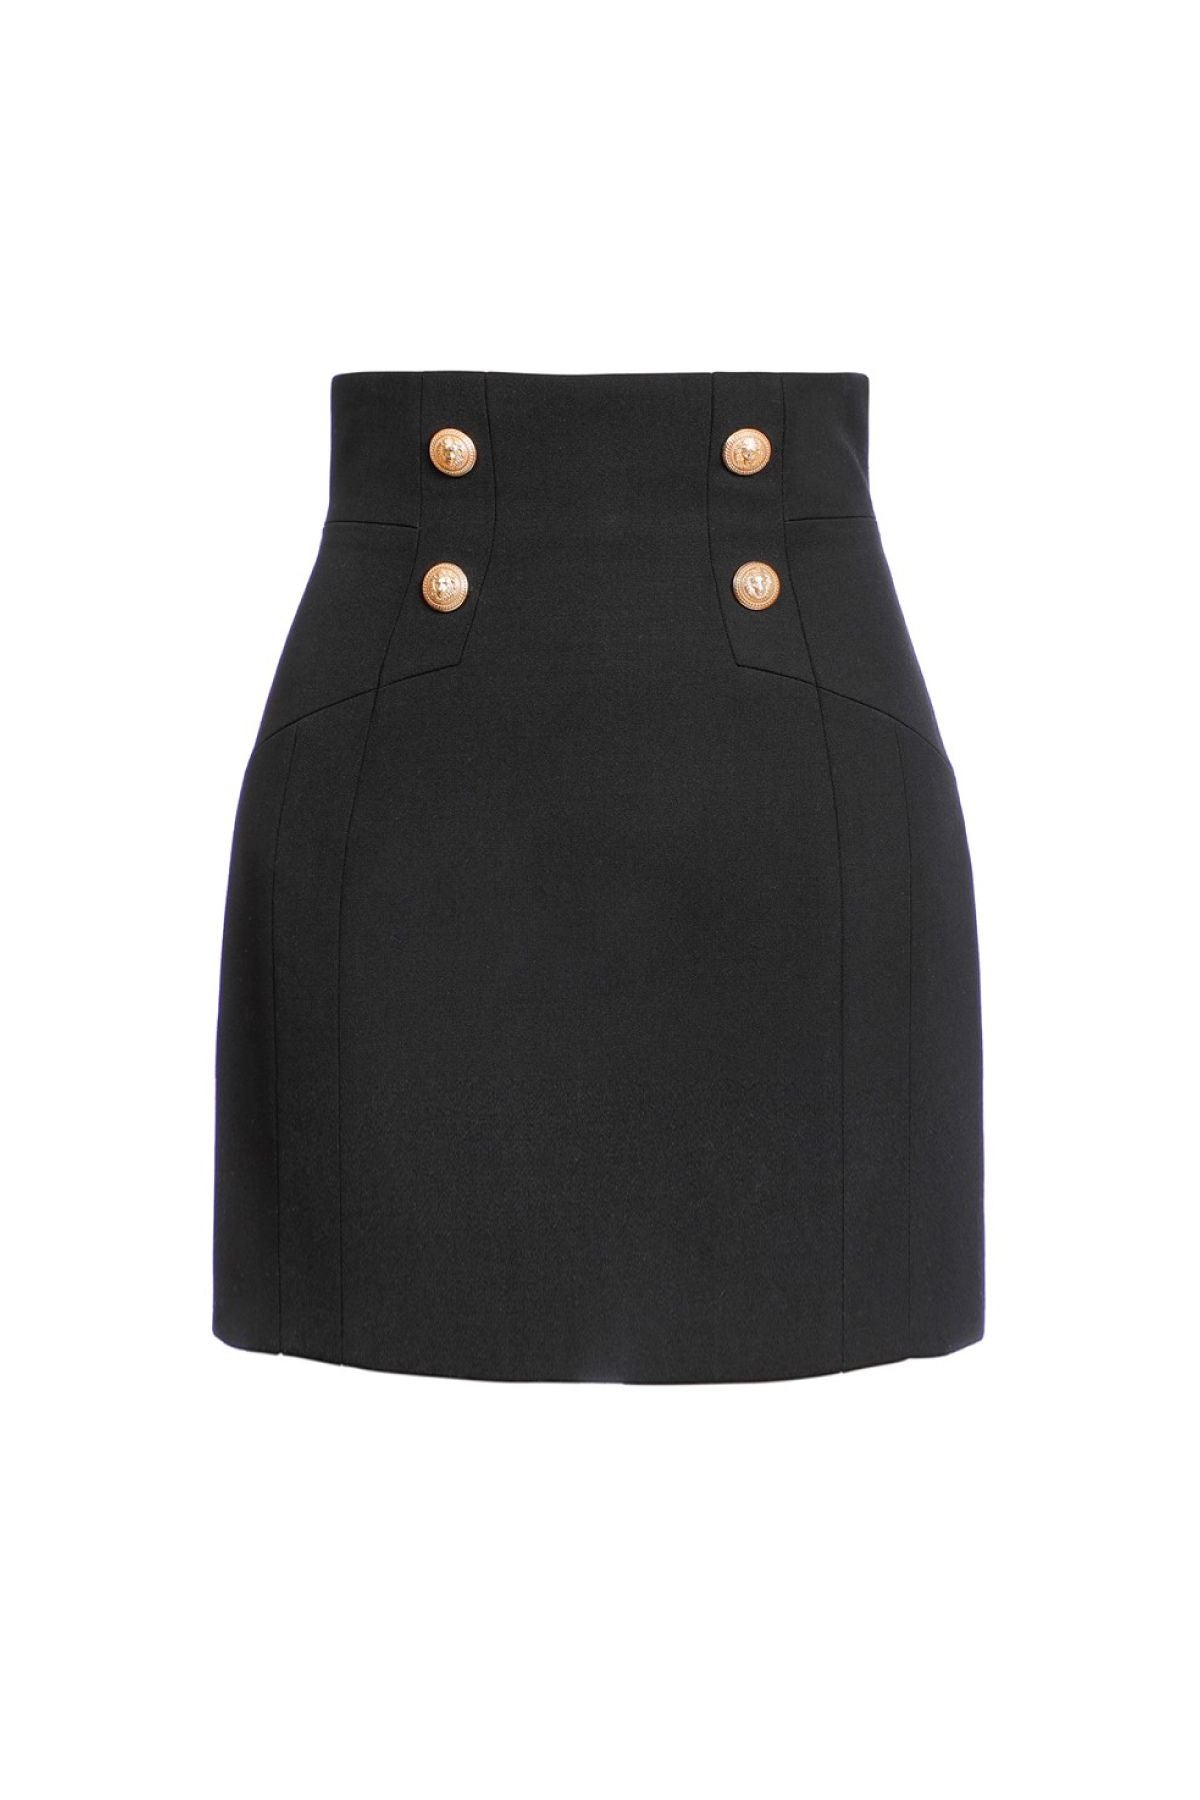 Balmain 4 Button Mini Skirt - Black